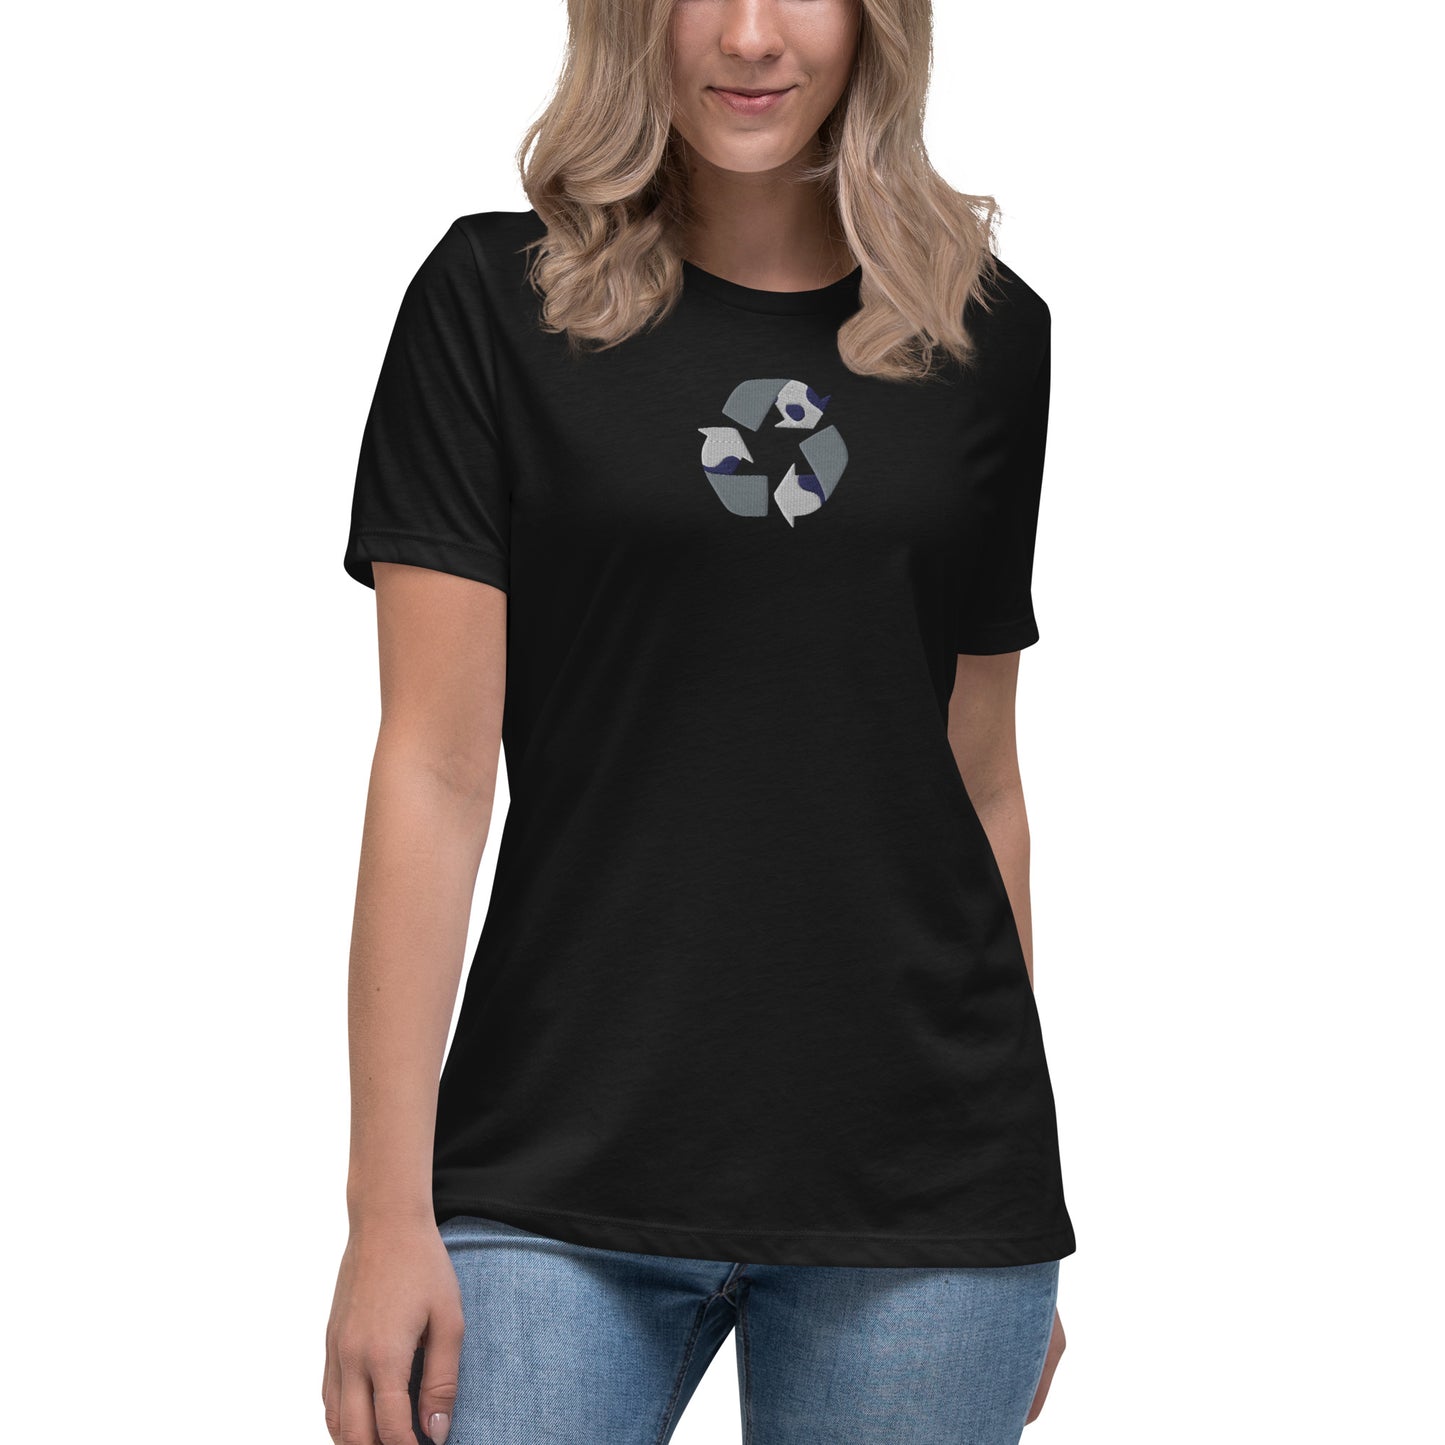 Camiseta bordada simbolo reciclaje mujer